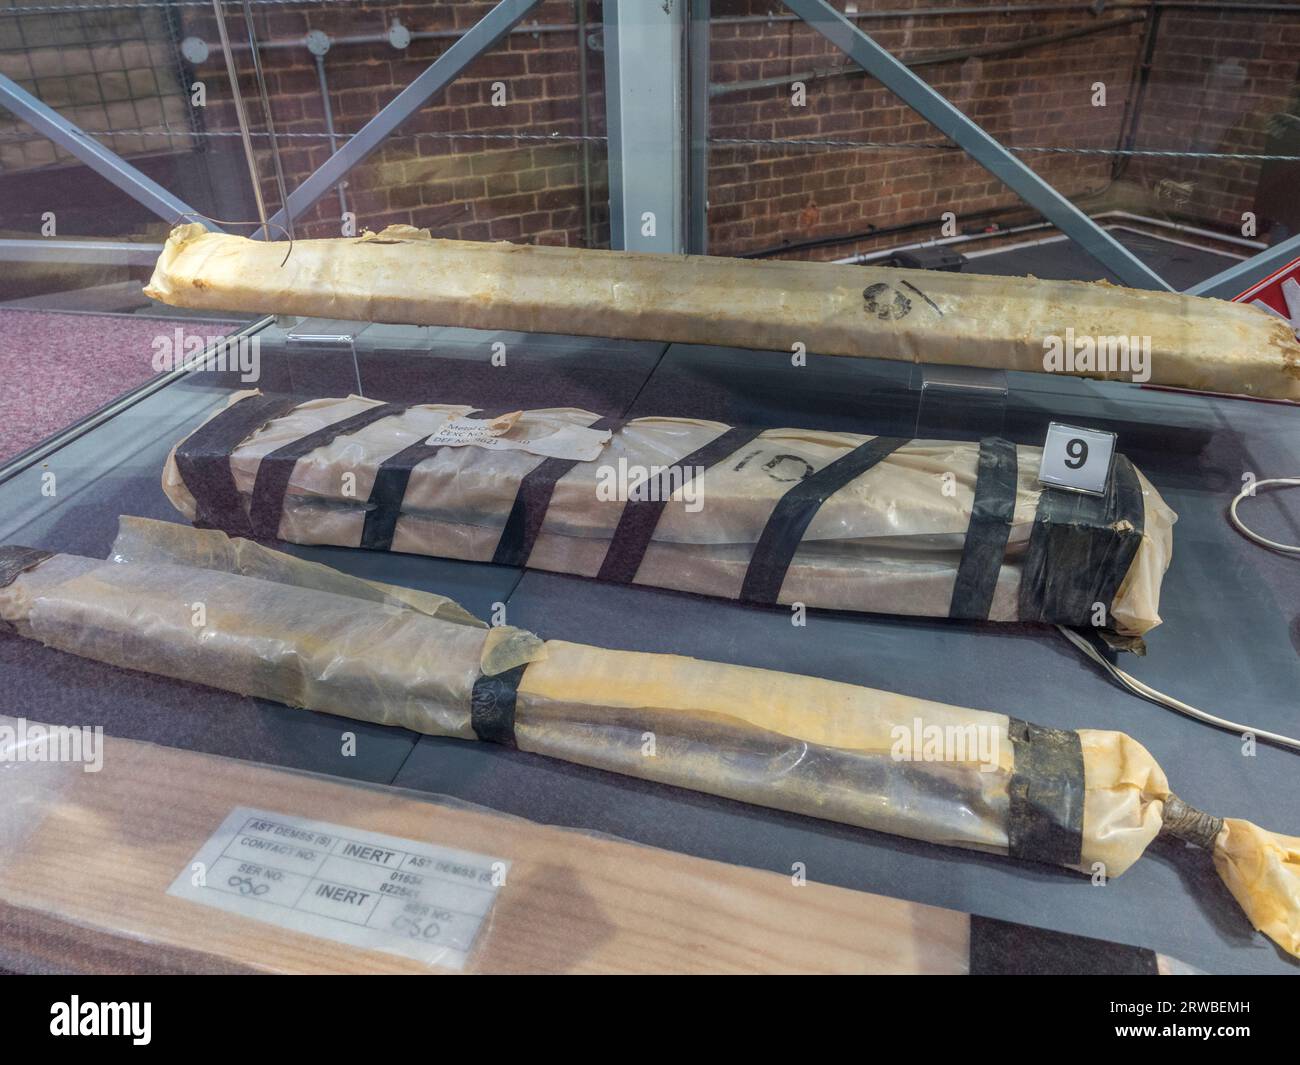 Esposizione di dispositivi esplosivi improvvisati inerti (IED) in mostra al Royal Engineers Museum di Gillingham, Kent, Regno Unito. Foto Stock